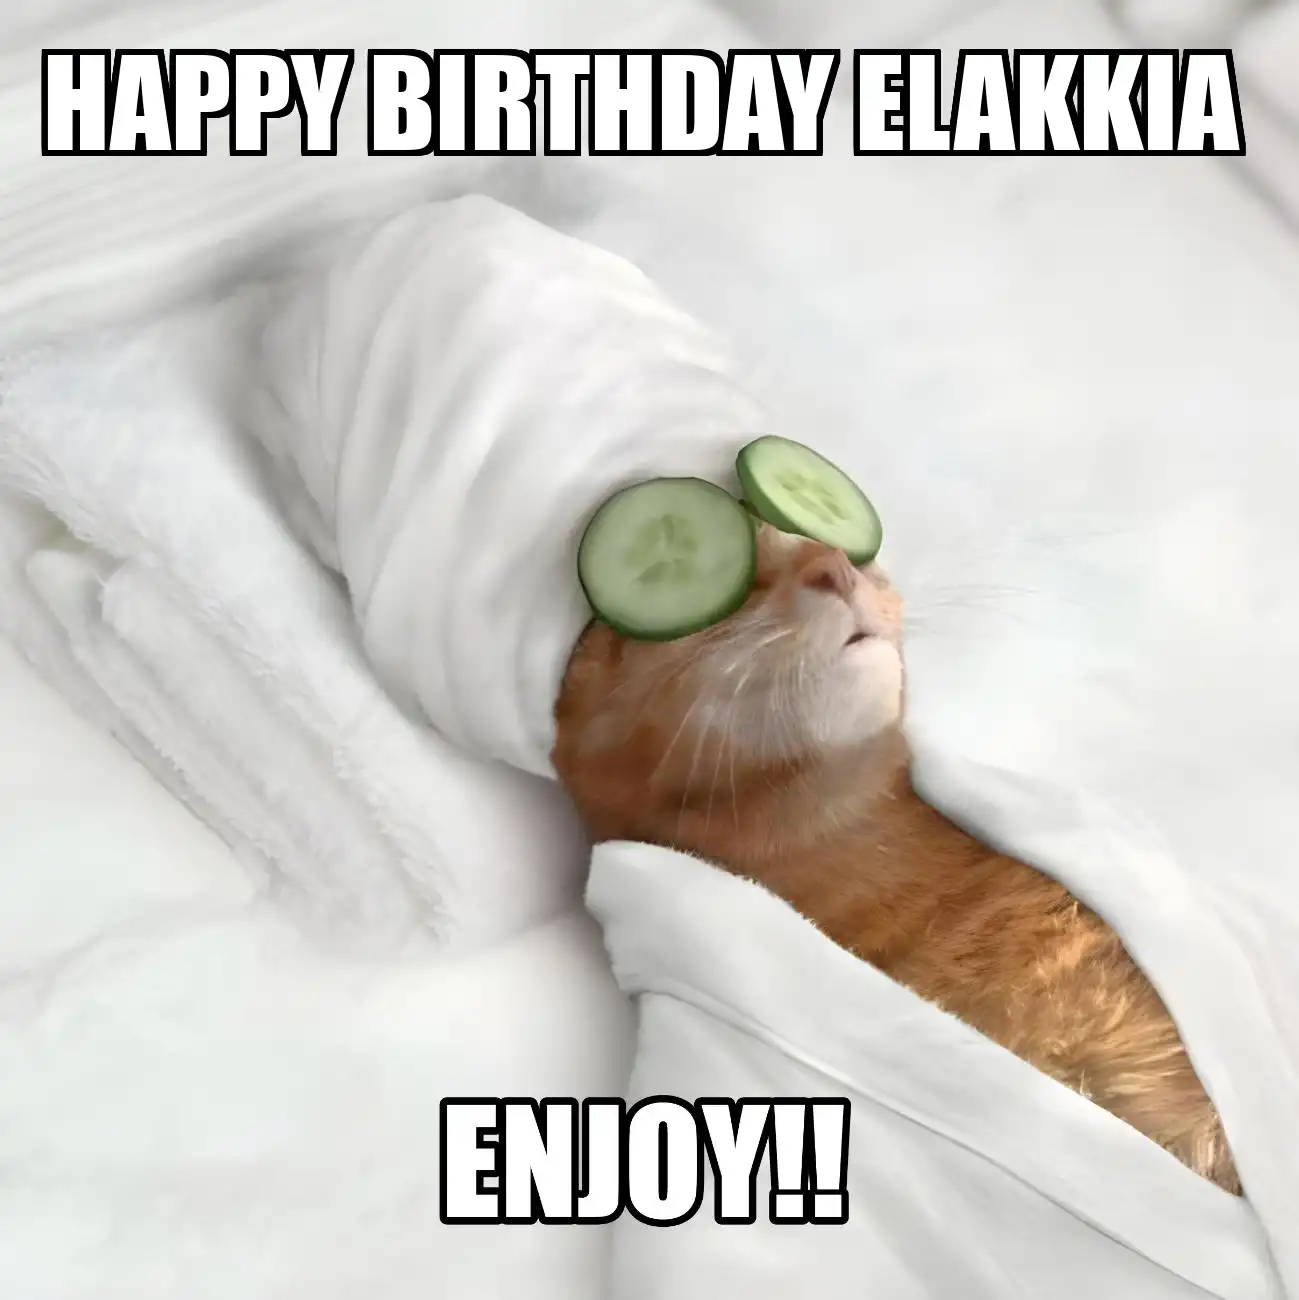 Happy Birthday Elakkia Enjoy Cat Meme